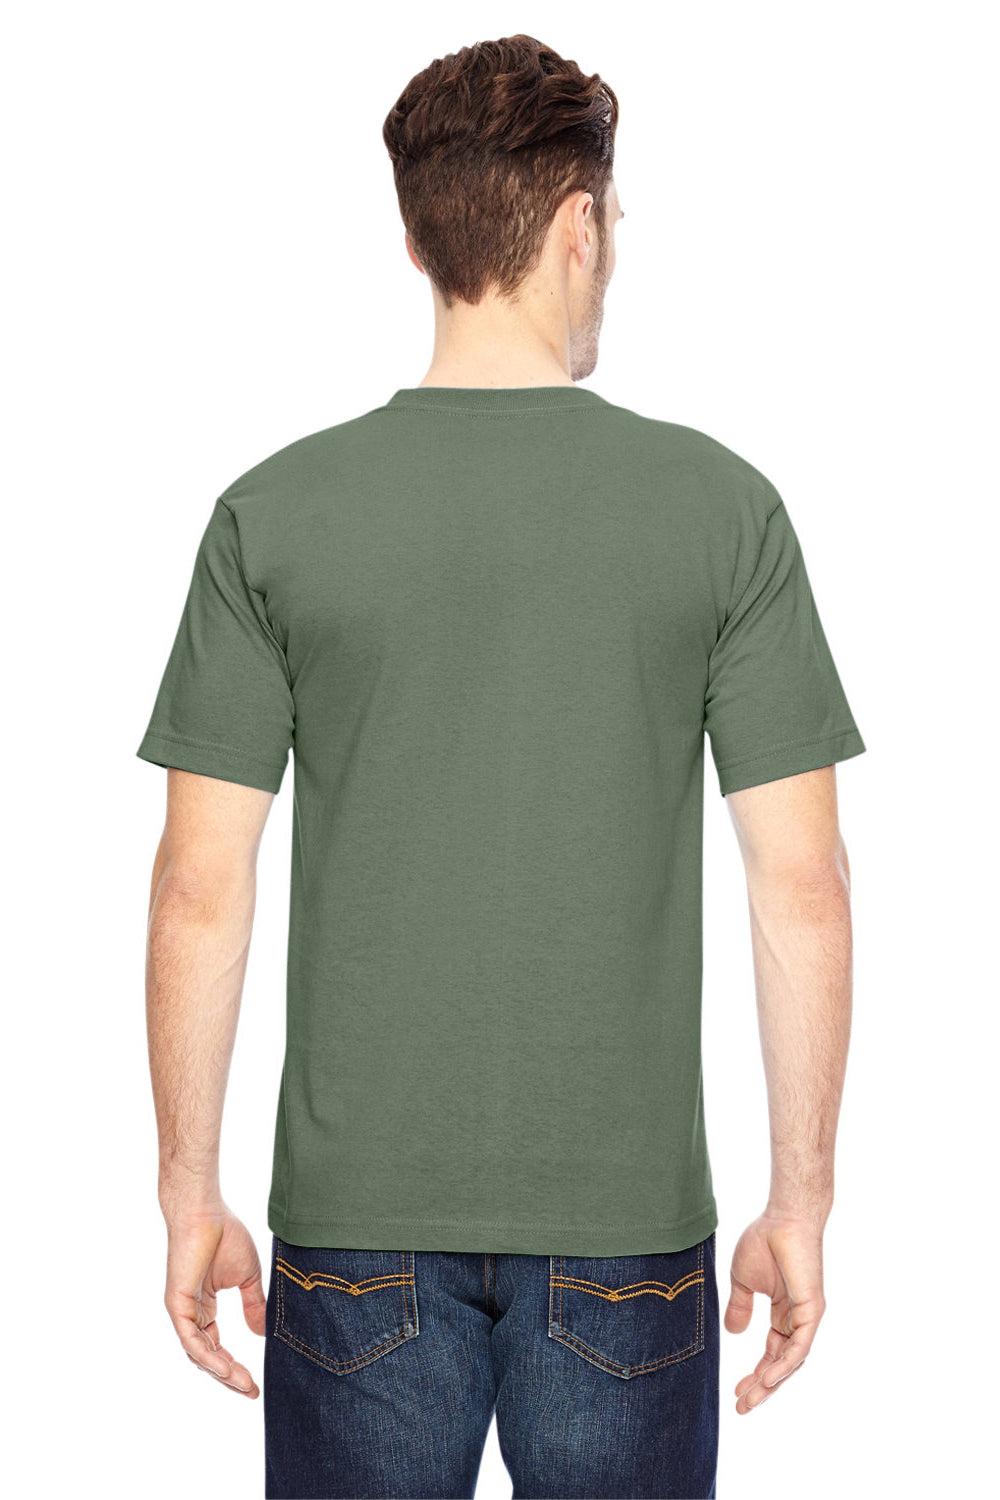 Bayside BA5100 Mens USA Made Short Sleeve Crewneck T-Shirt Army Green Model Back